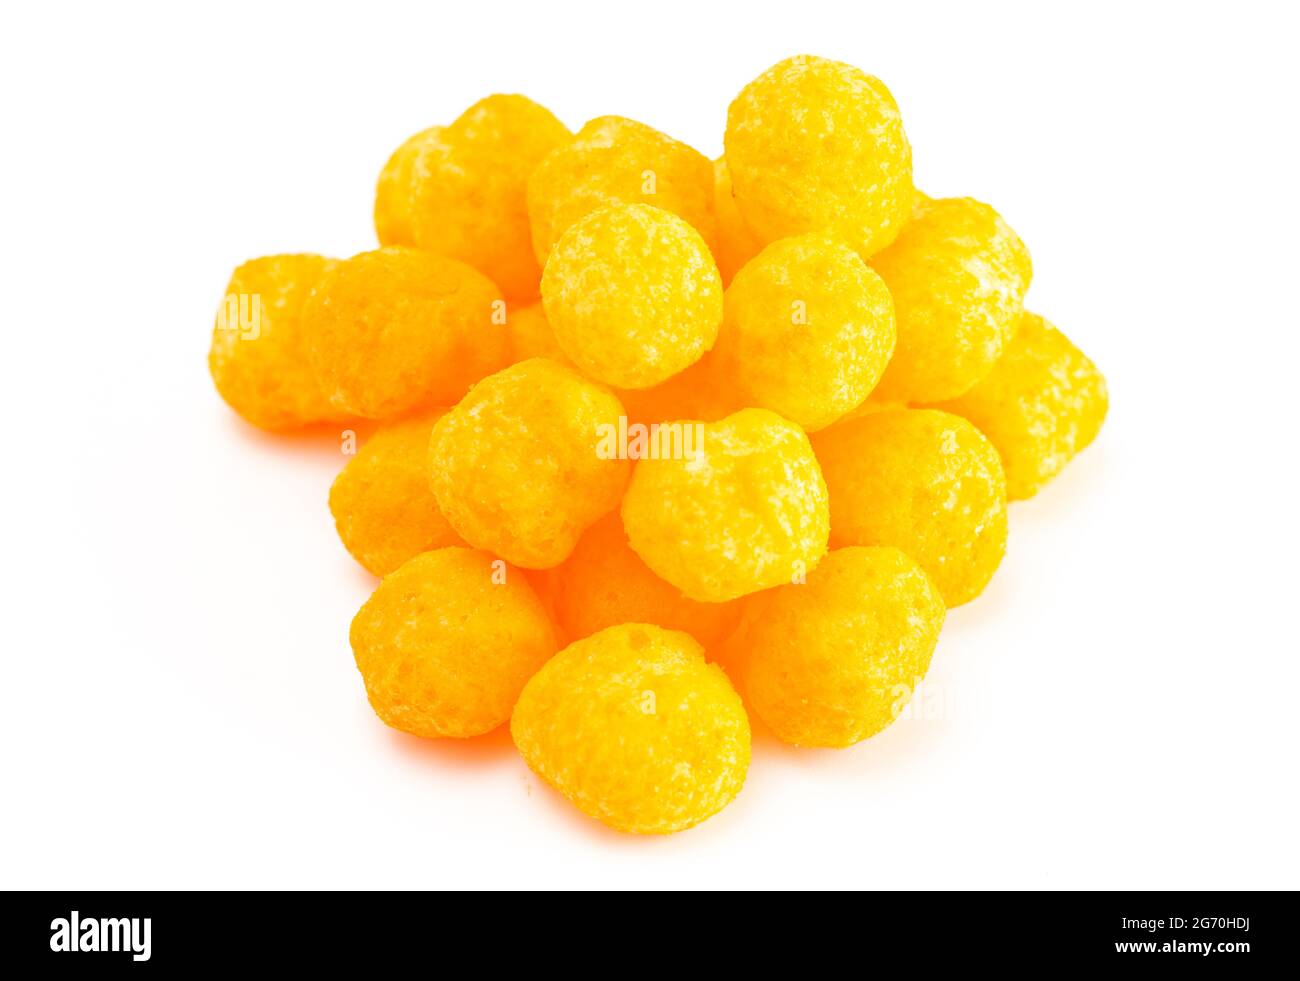 Premium Photo  Cheese balls isolated on white background